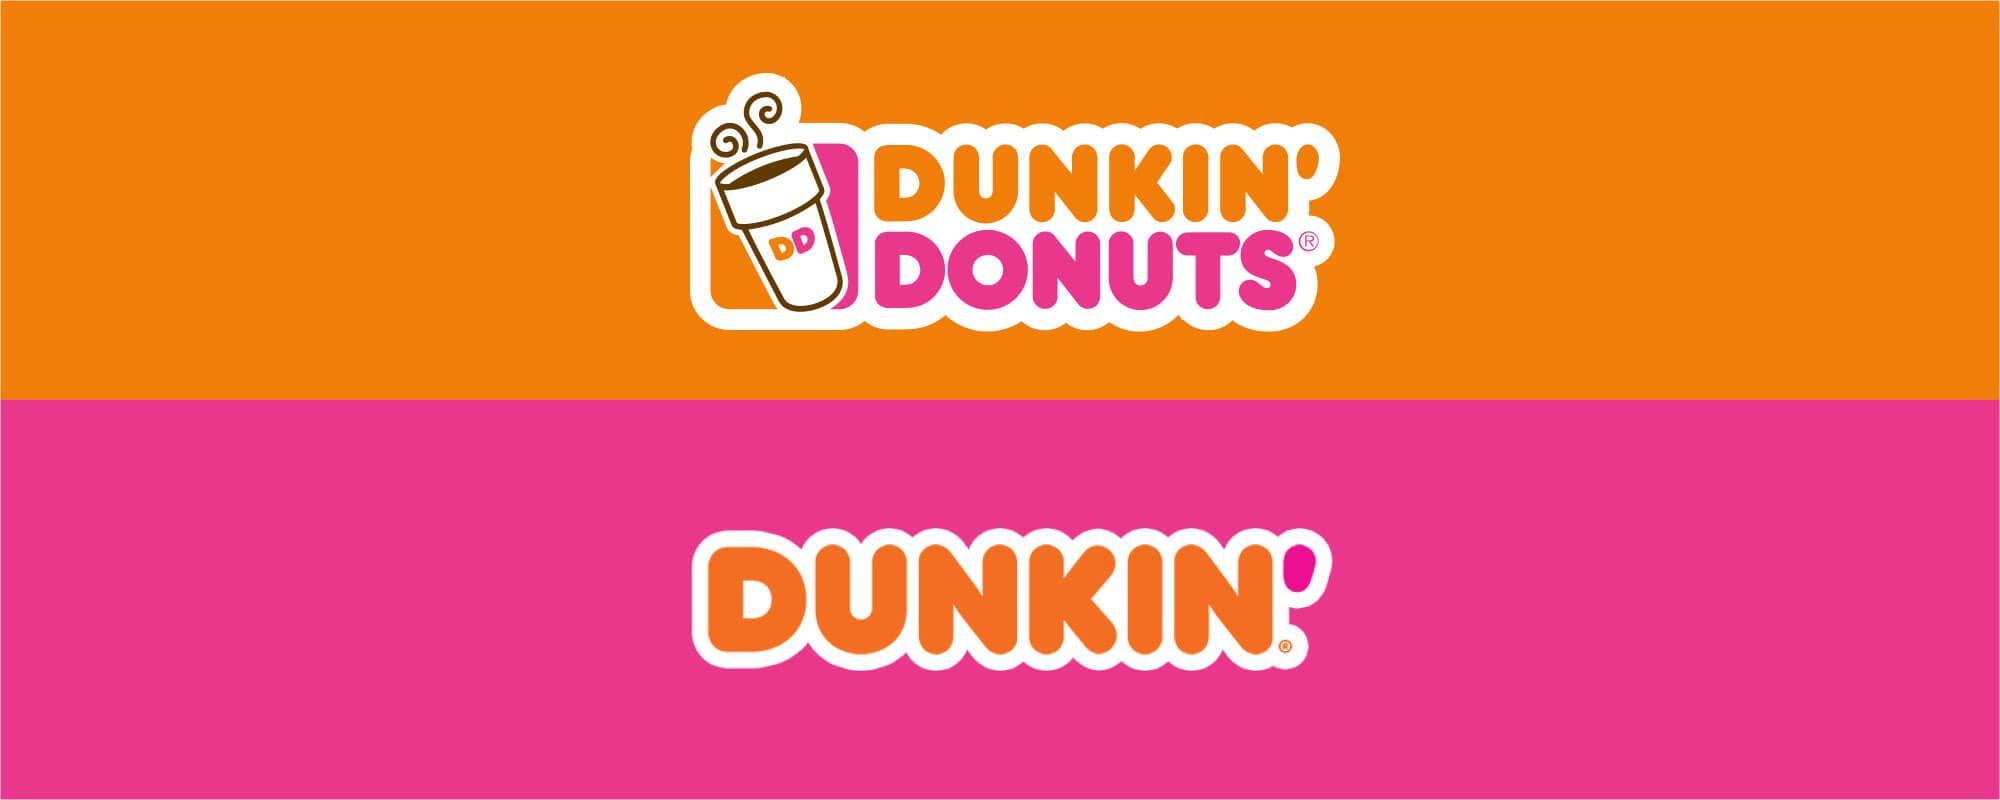 Dunkin Logo - 10 of the biggest brand logo redesigns of 2018 | Major Tom